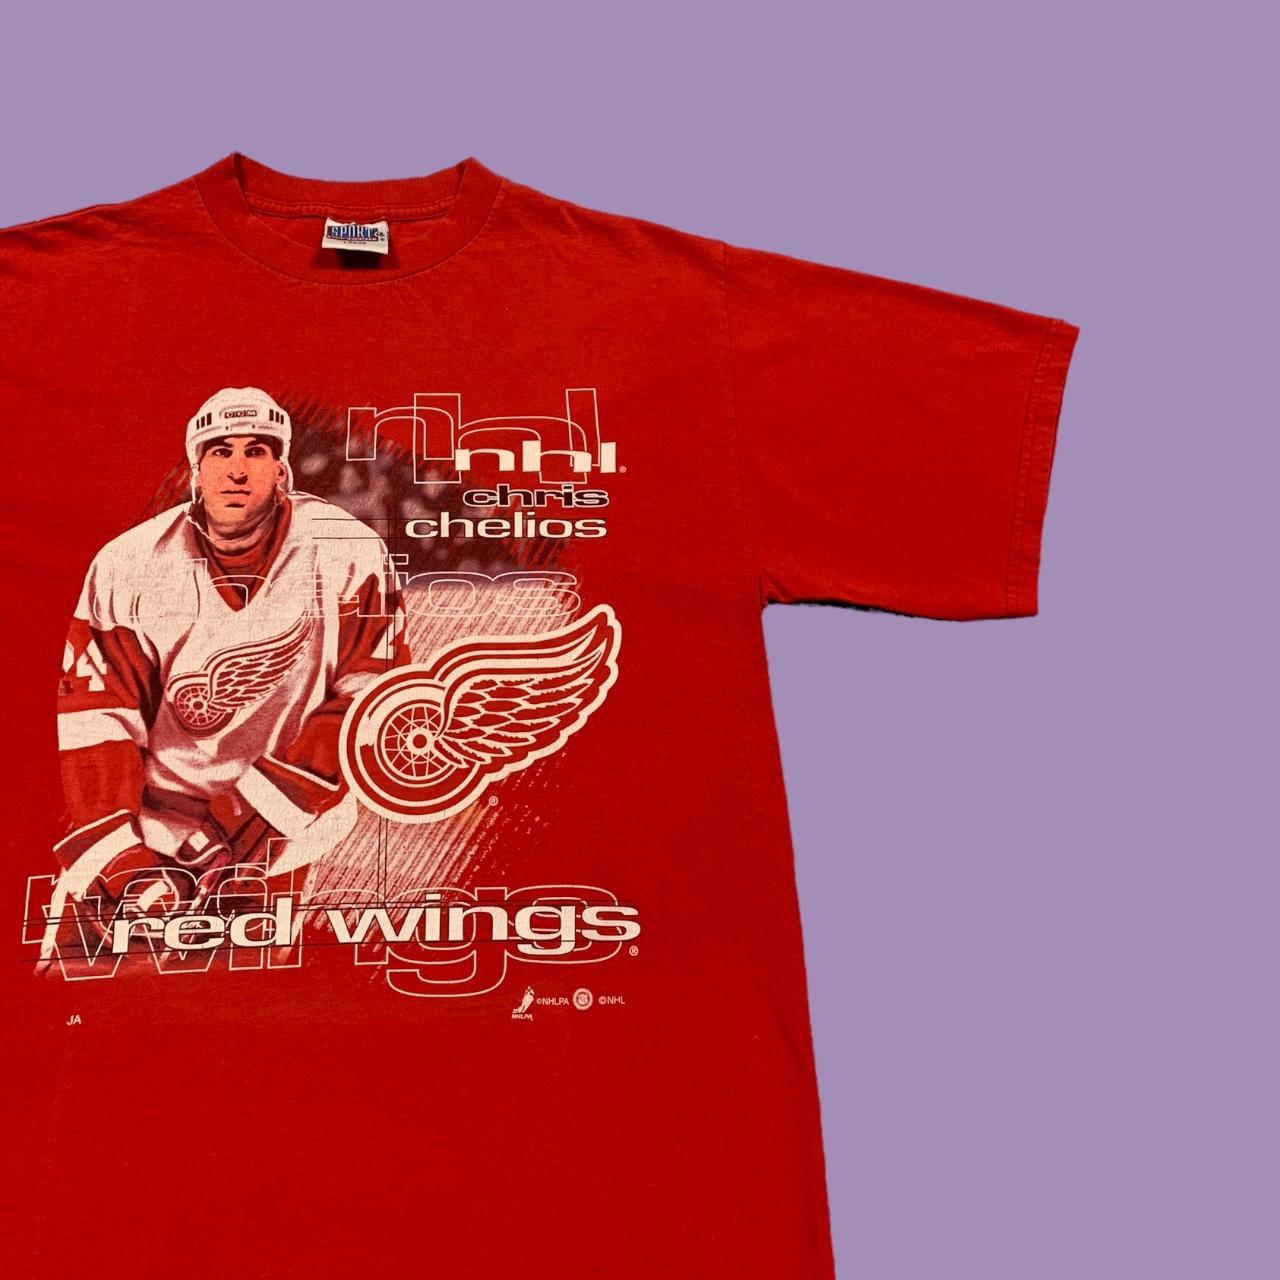 Detroit Red Wings NHL T-Shirt National Hockey League - Depop